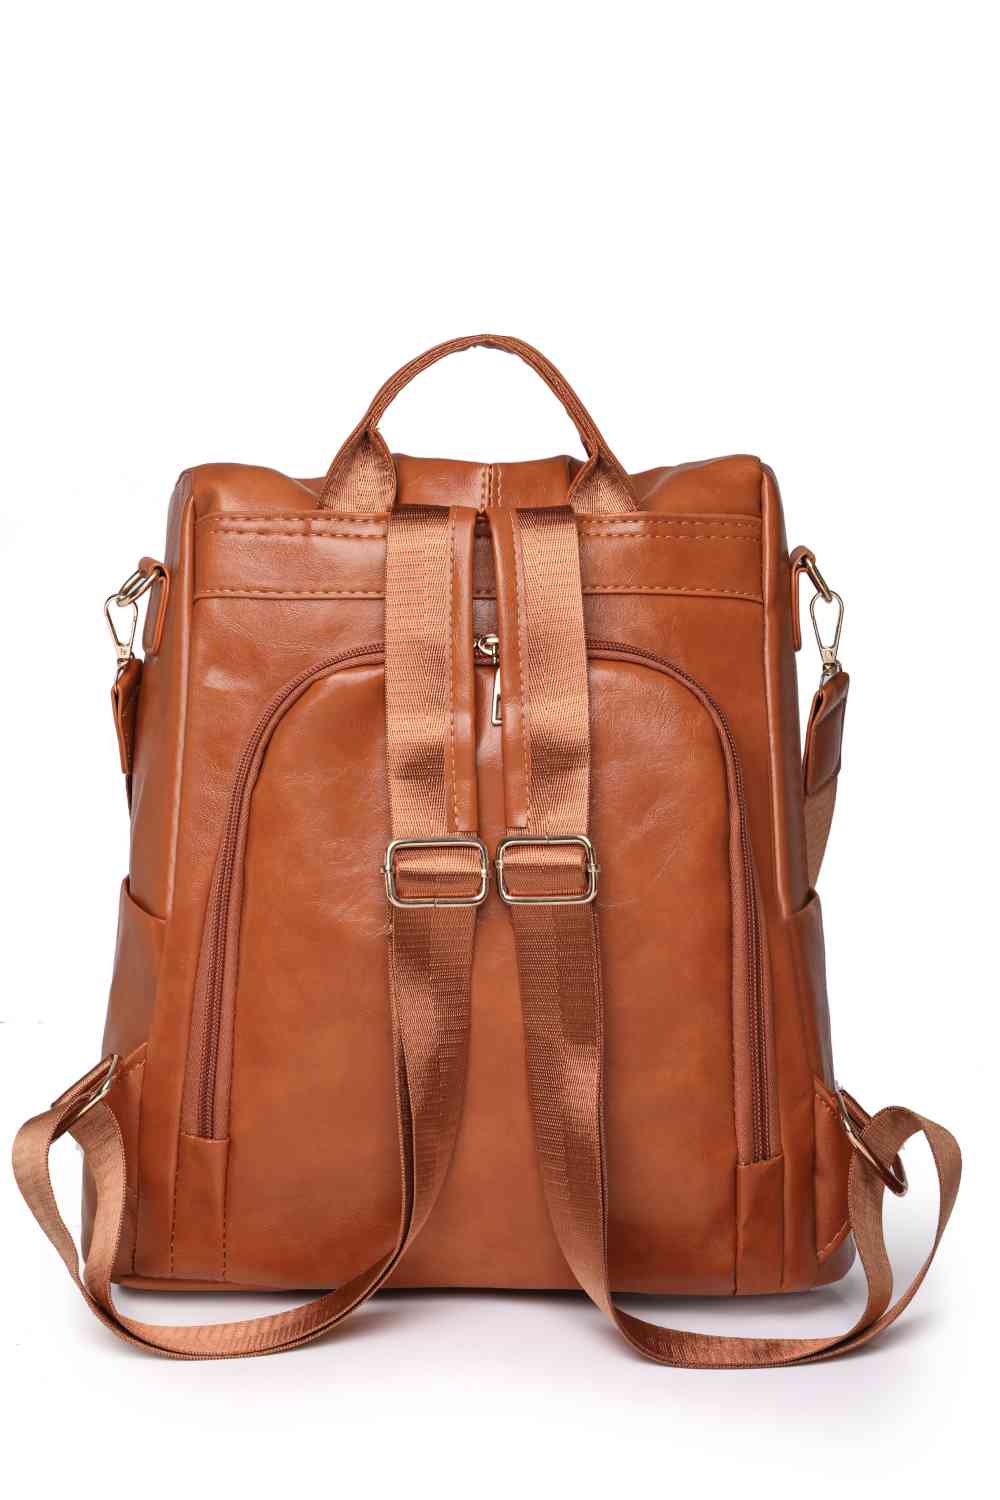 Traveler's Companion Zipper Pocket Vegan Leather Backpack | Hypoallergenic - Allergy Friendly - Naturally Free